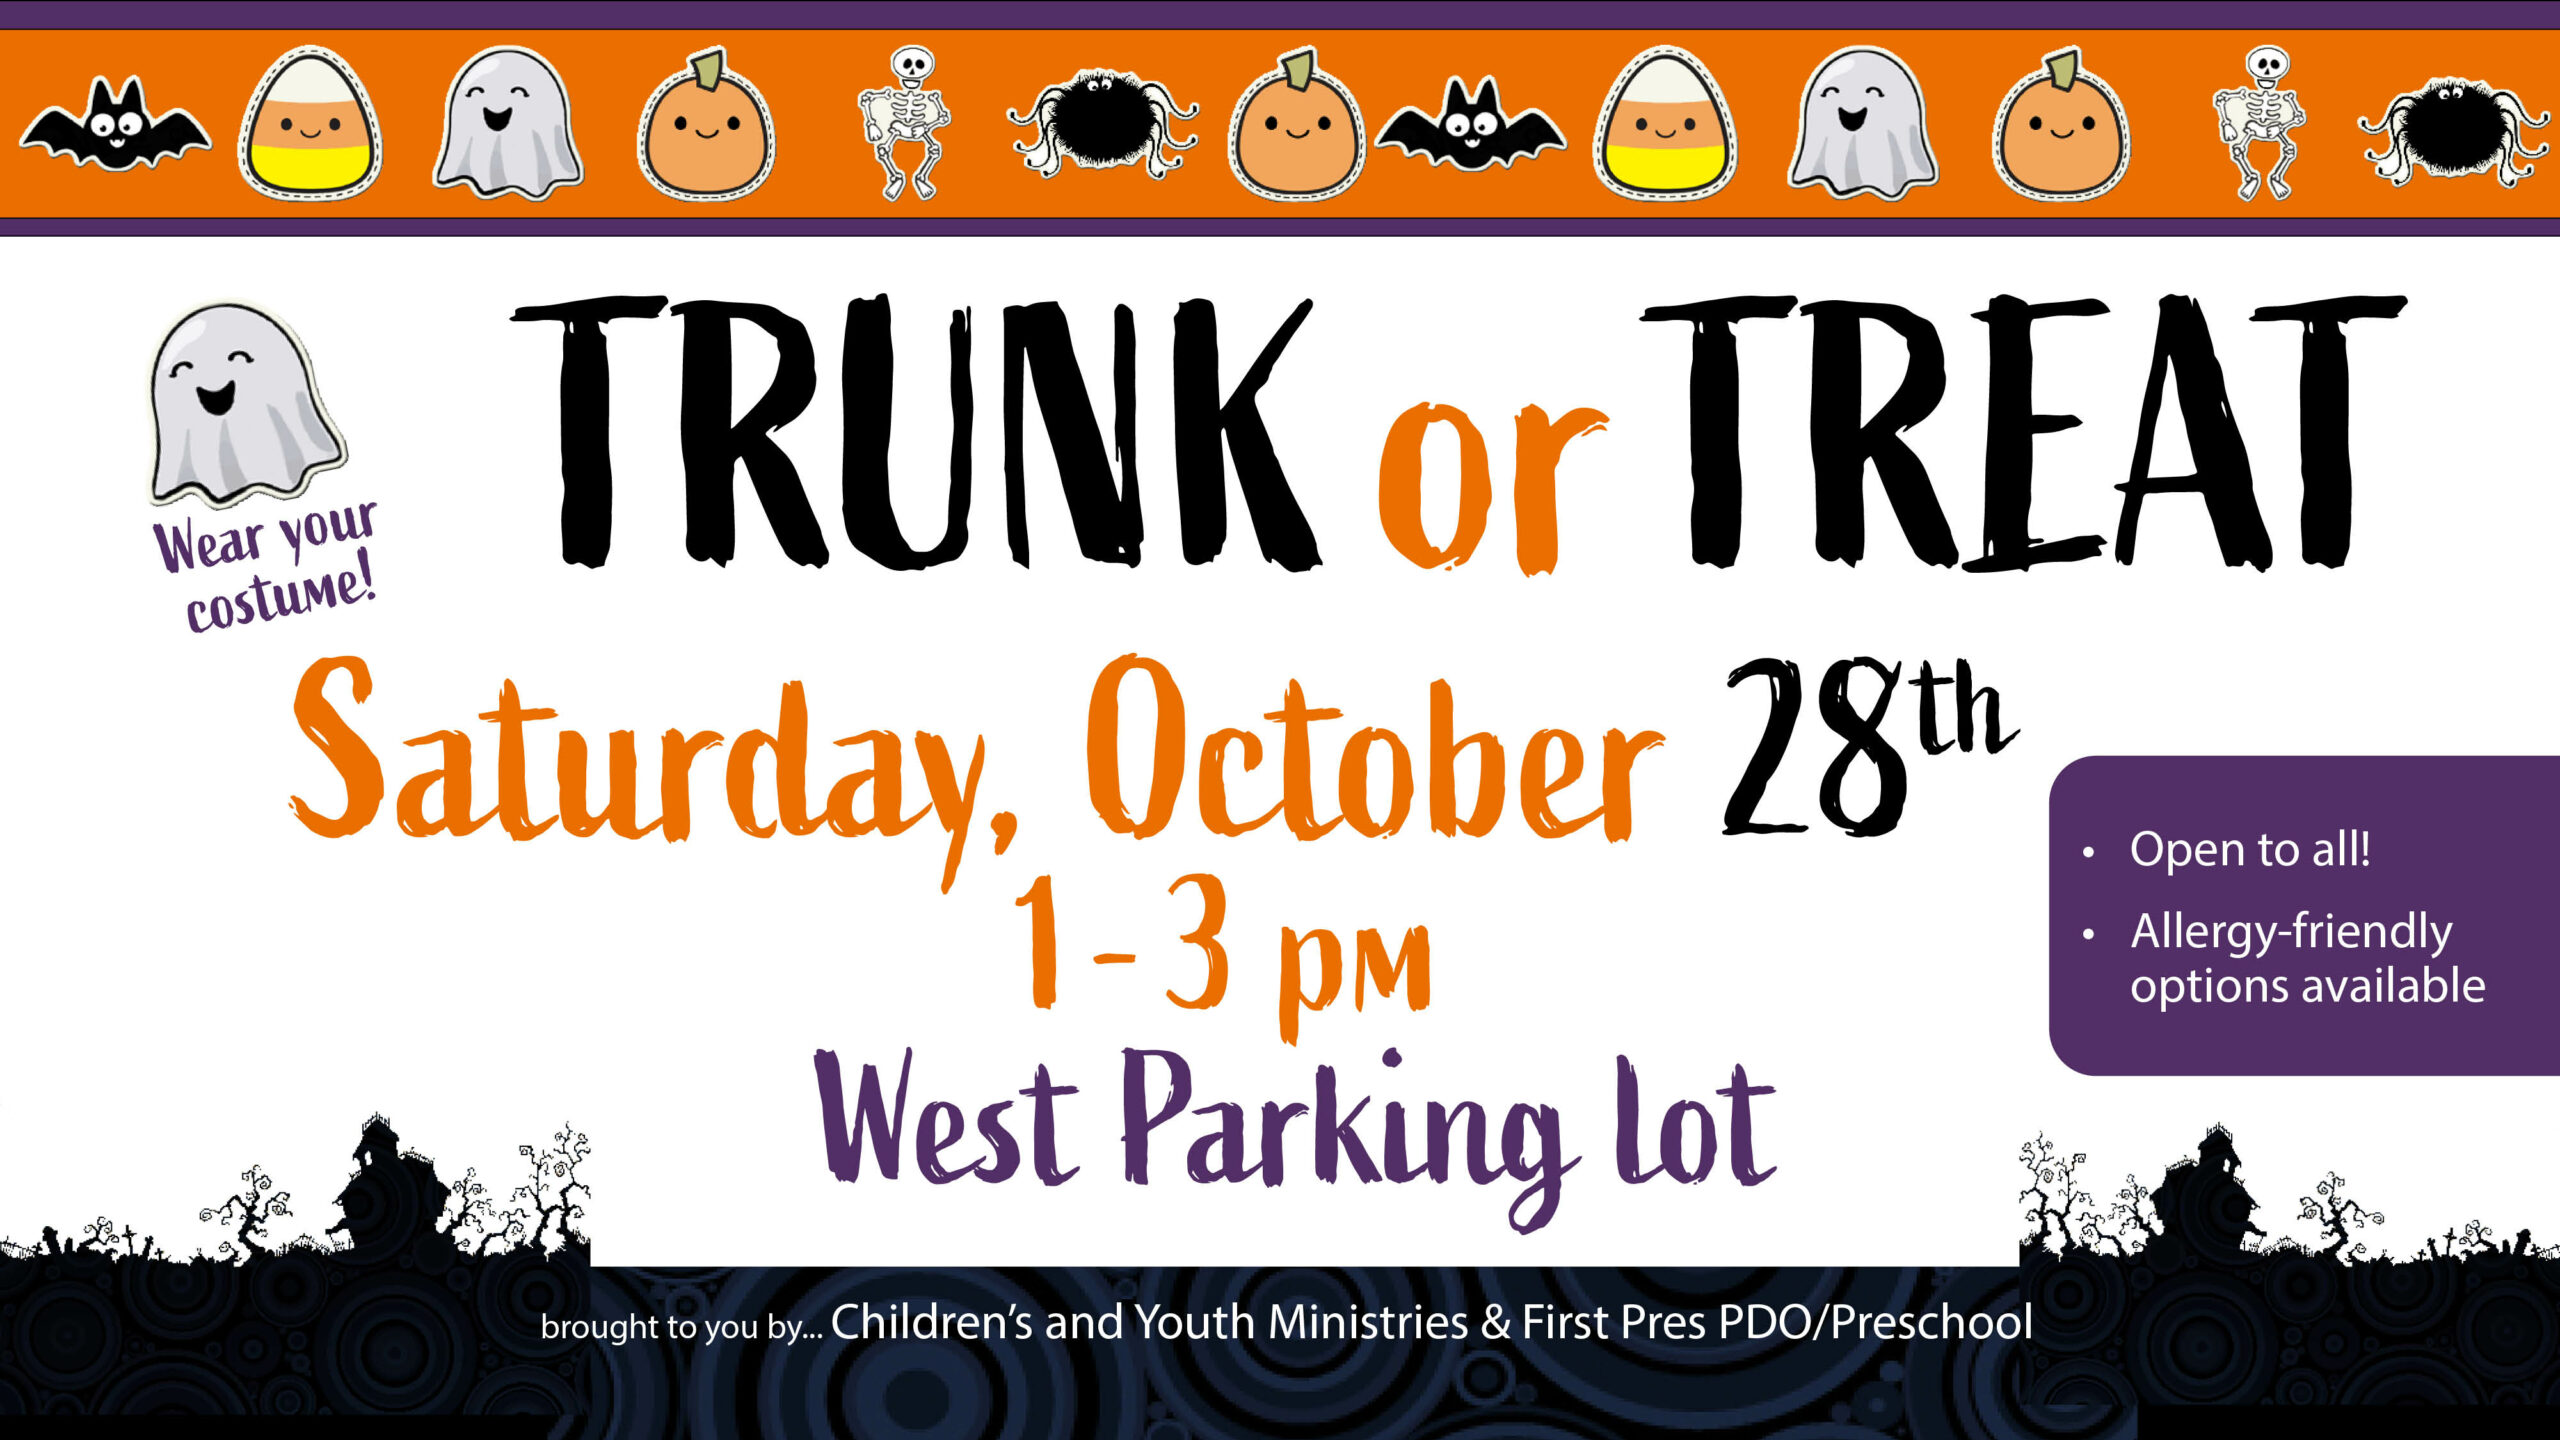 Halloween Trunk or Treat First Presbyterian Church of Arlington Heights